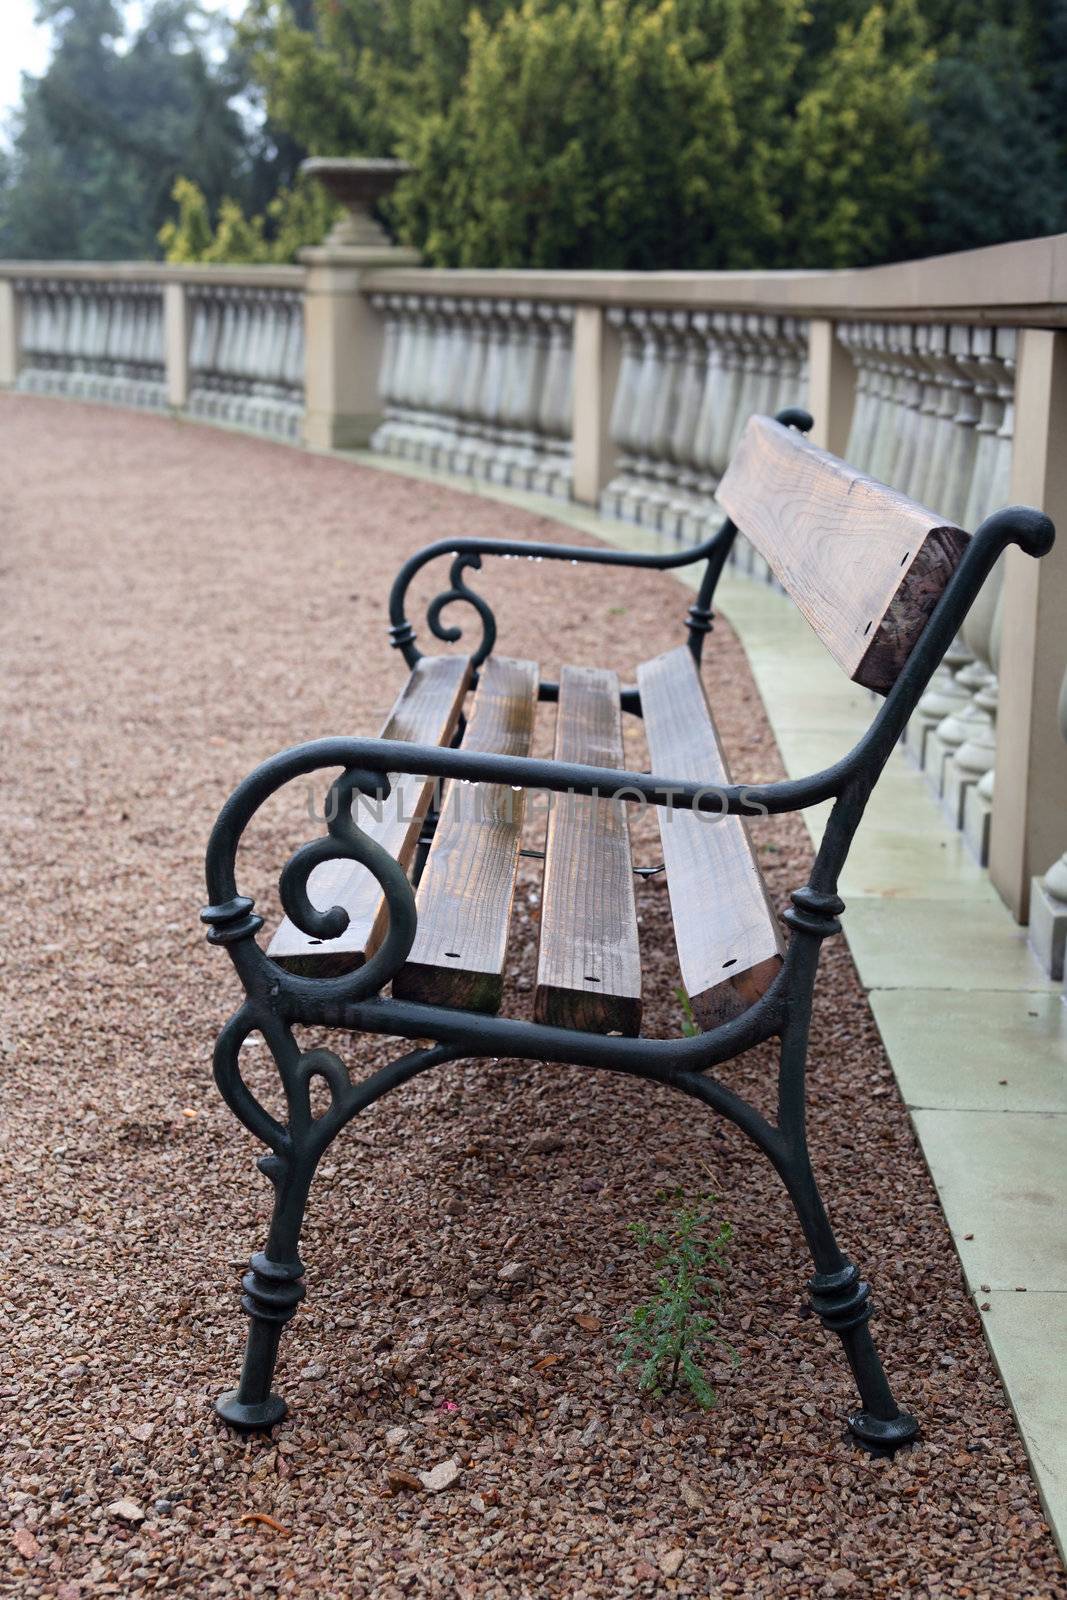 Stylish wooden park bench near stone fence after rain